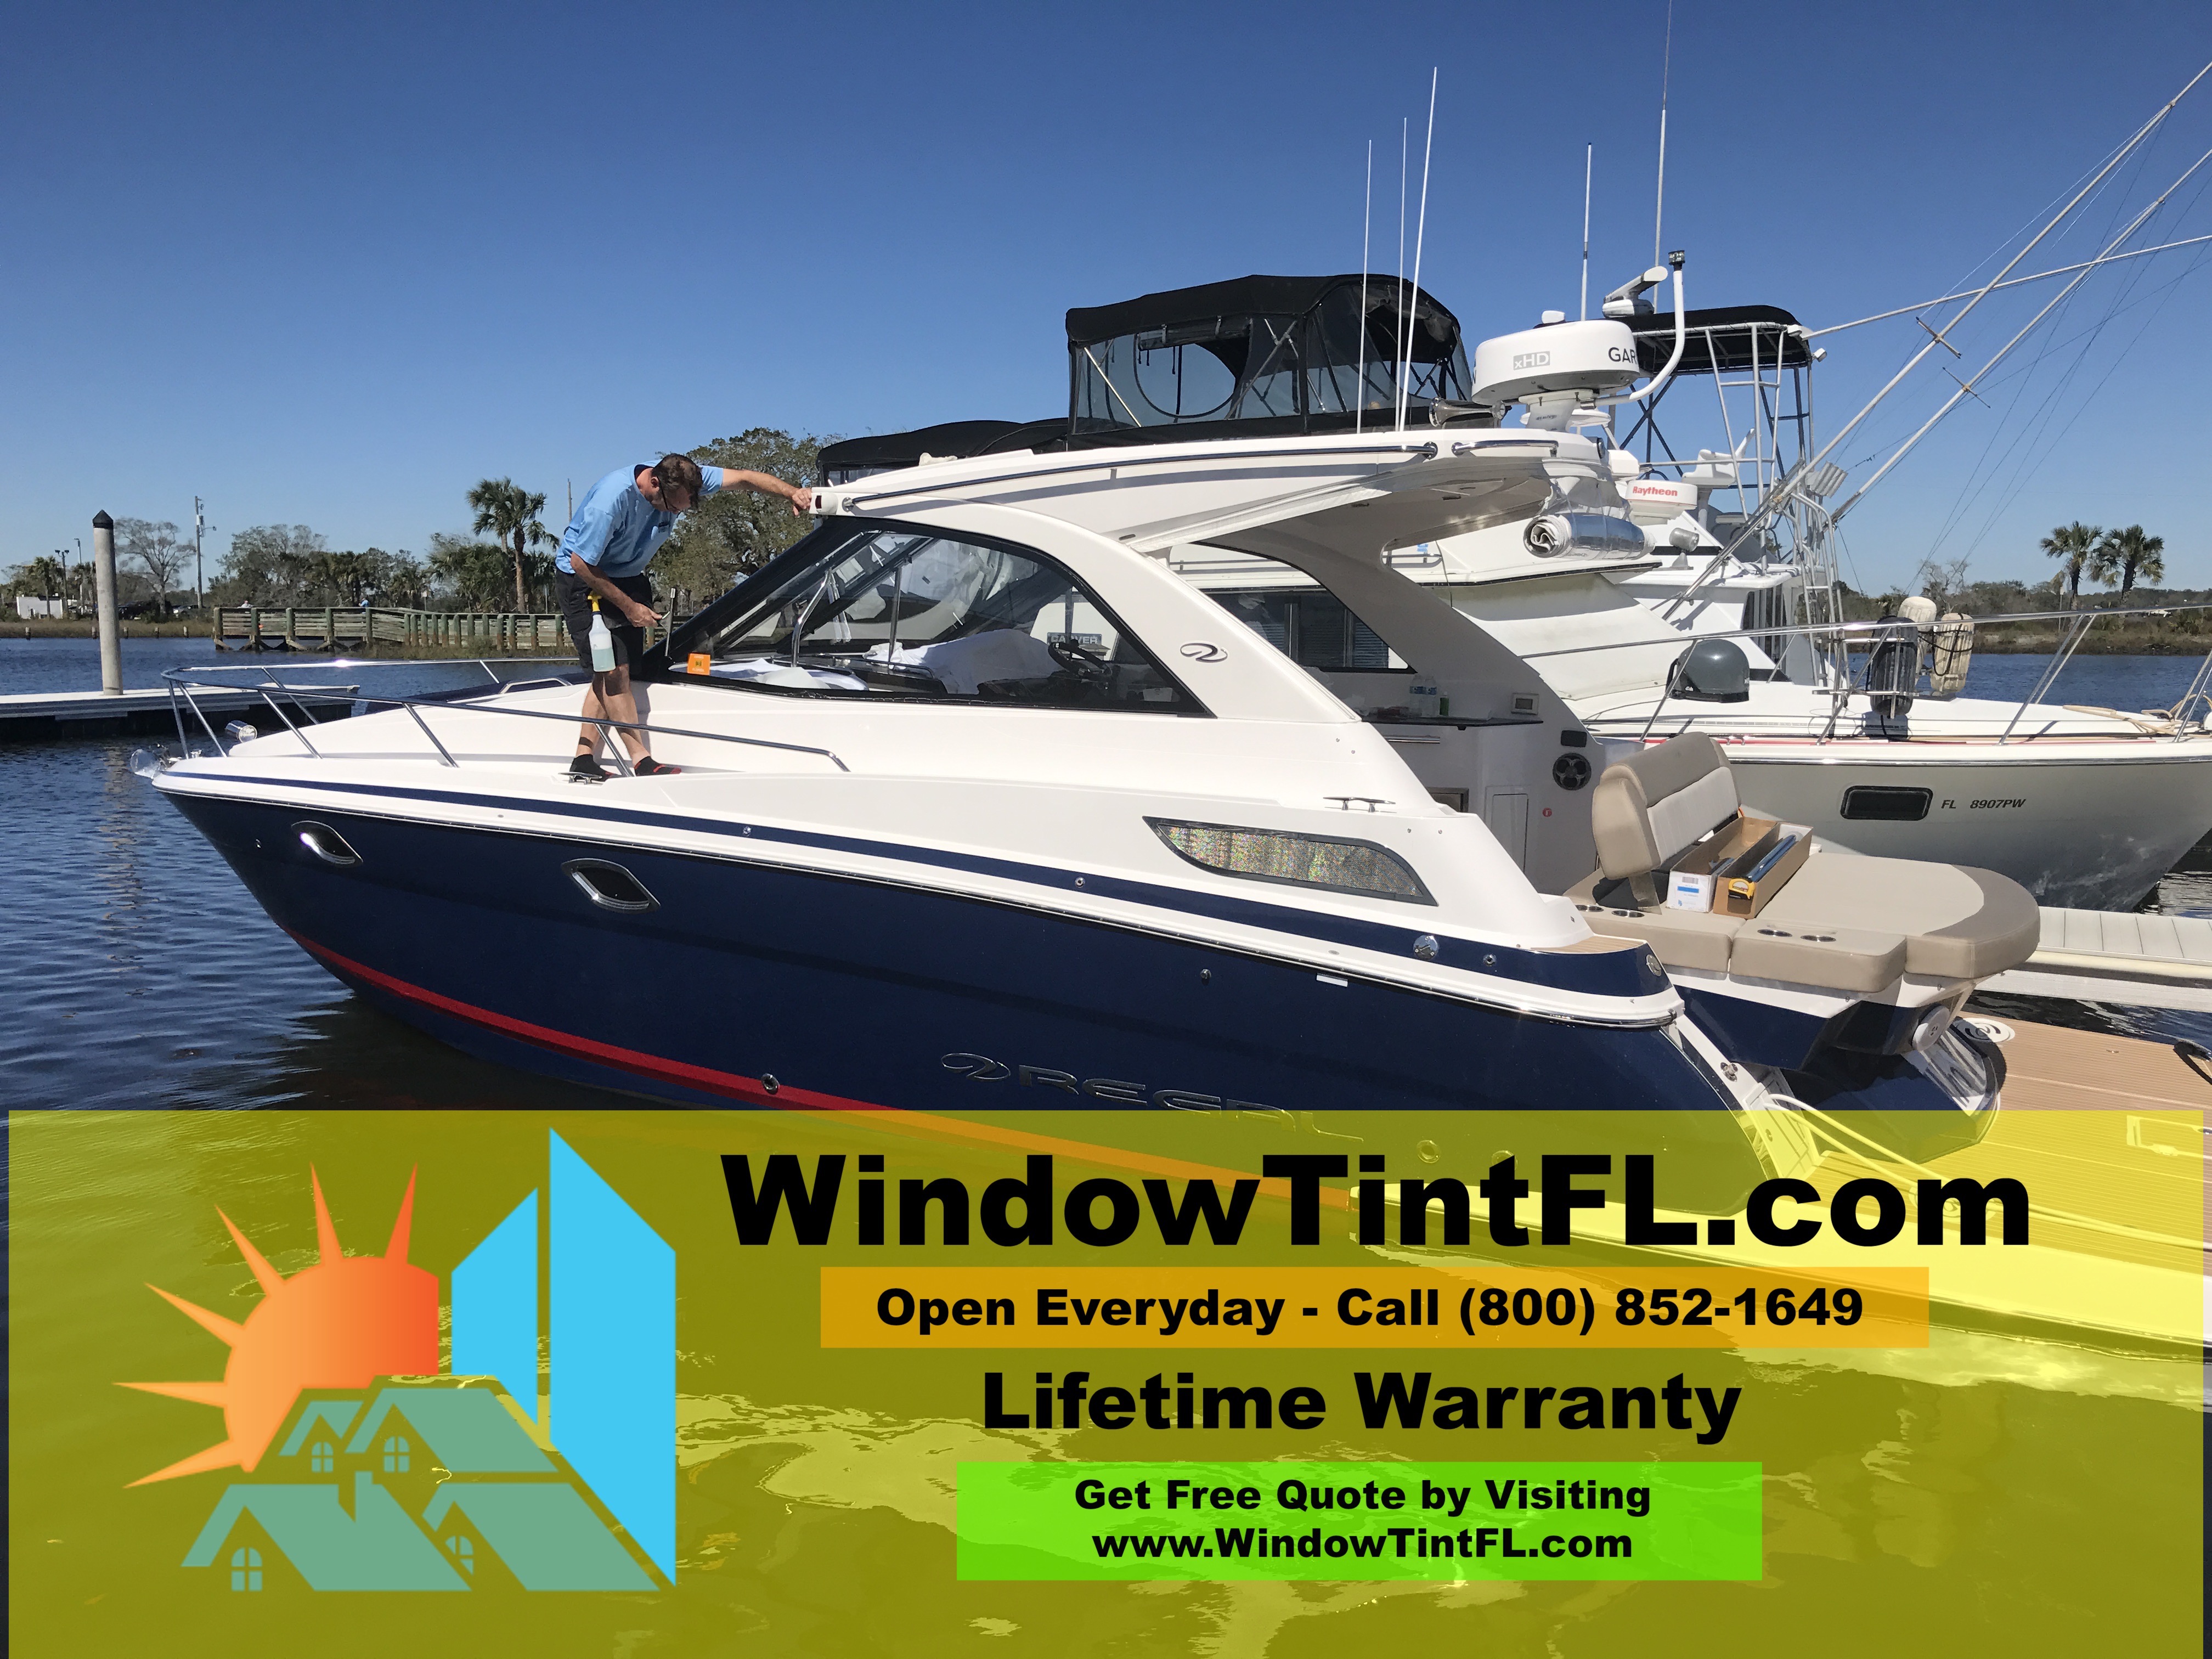 Regal 35' SC Yacht Window Tint in Florida